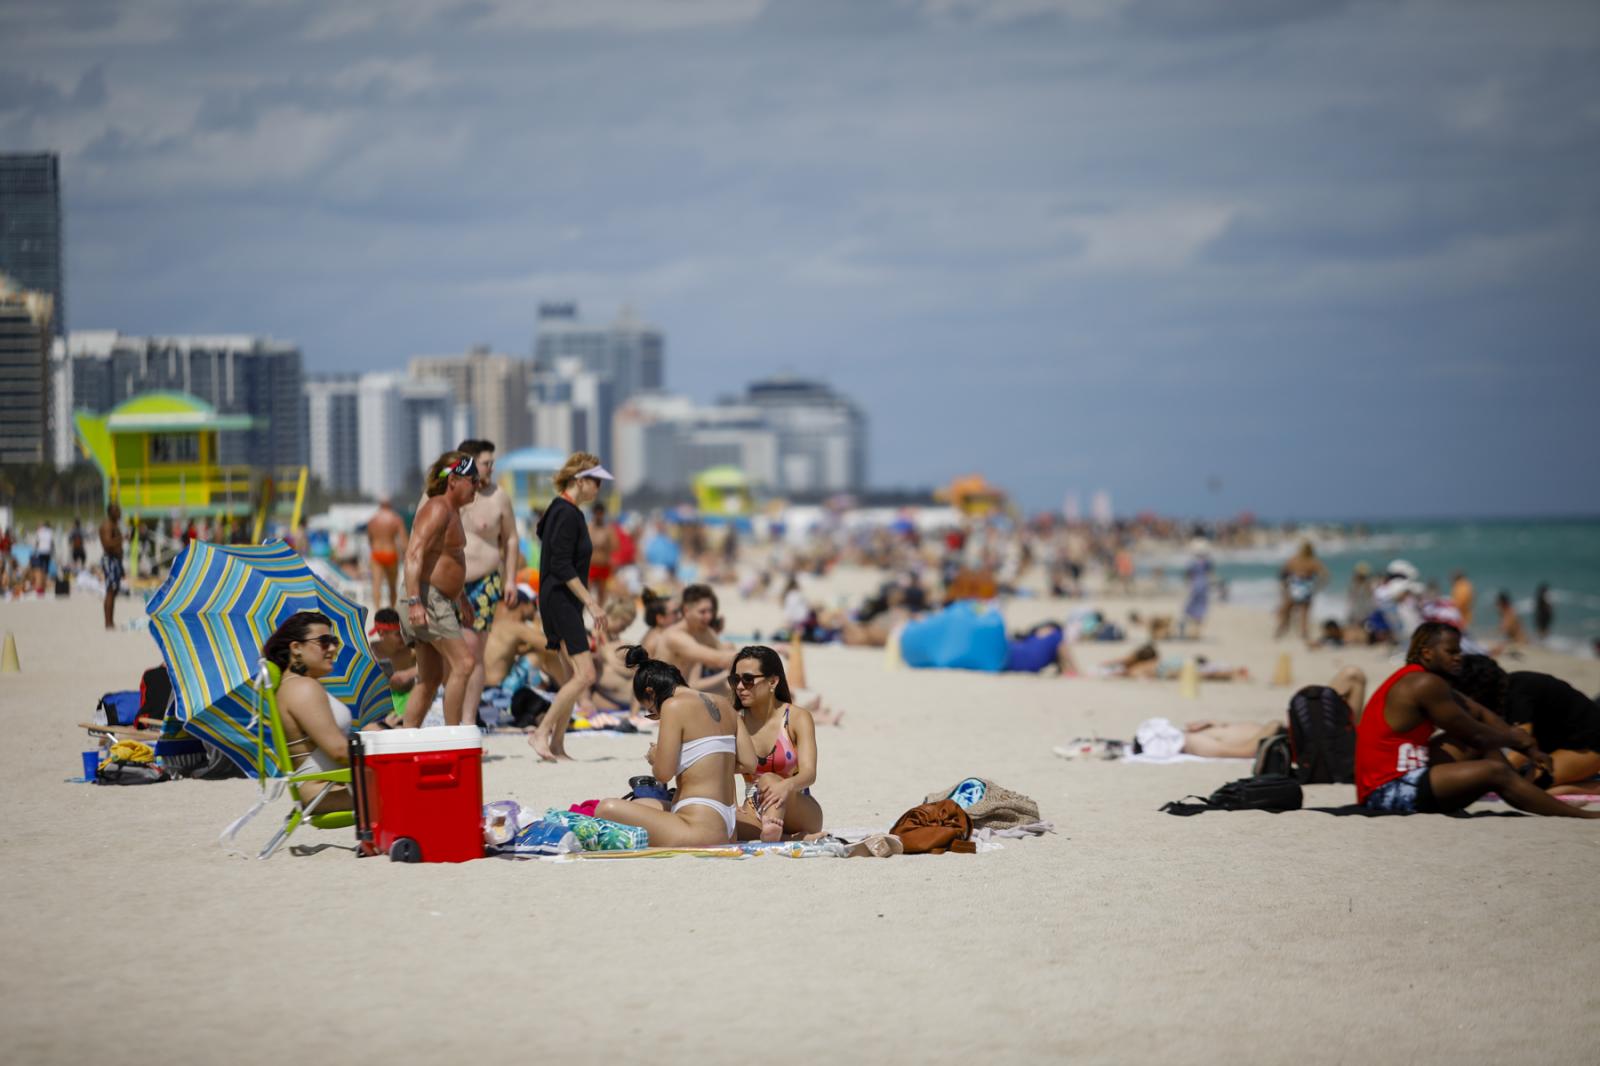 People sit on the beach during ...: Eva Marie Uzcategui/Bloomberg